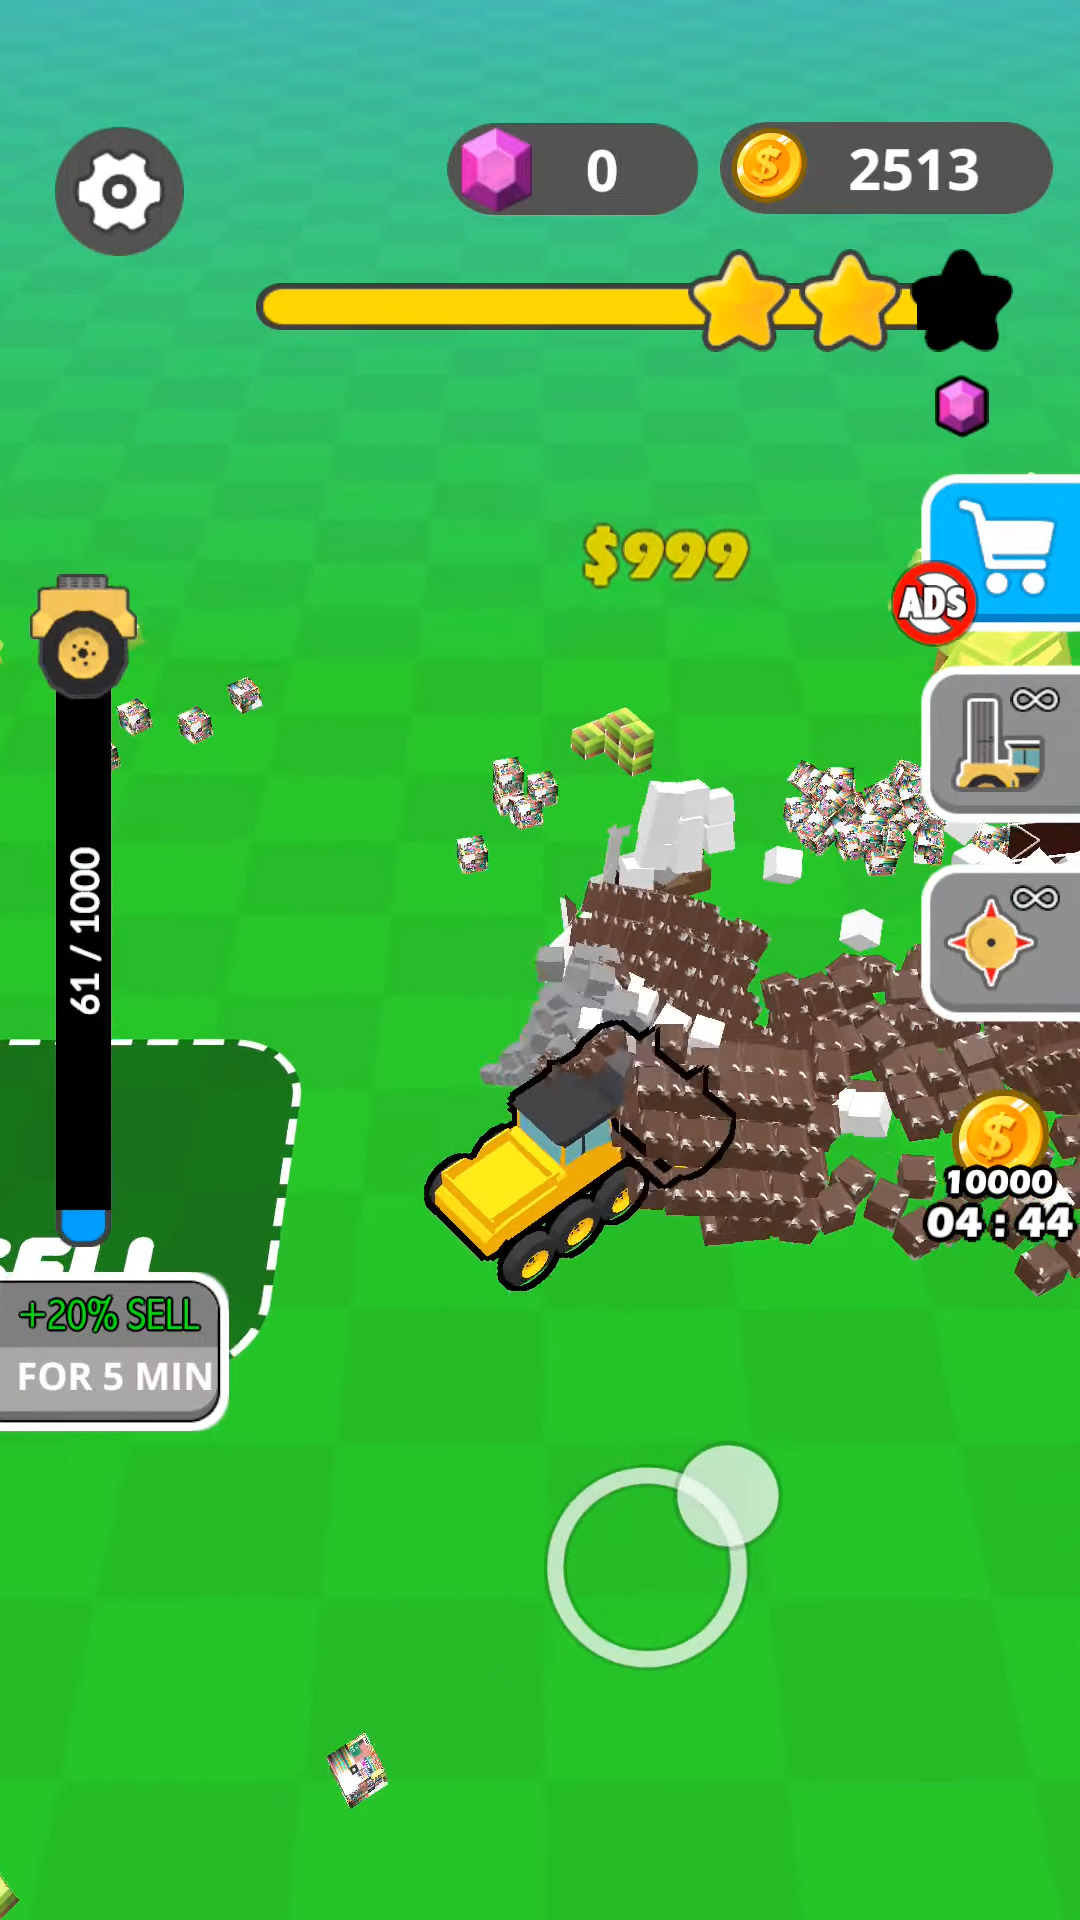 Demolition Car! - Android game screenshots.